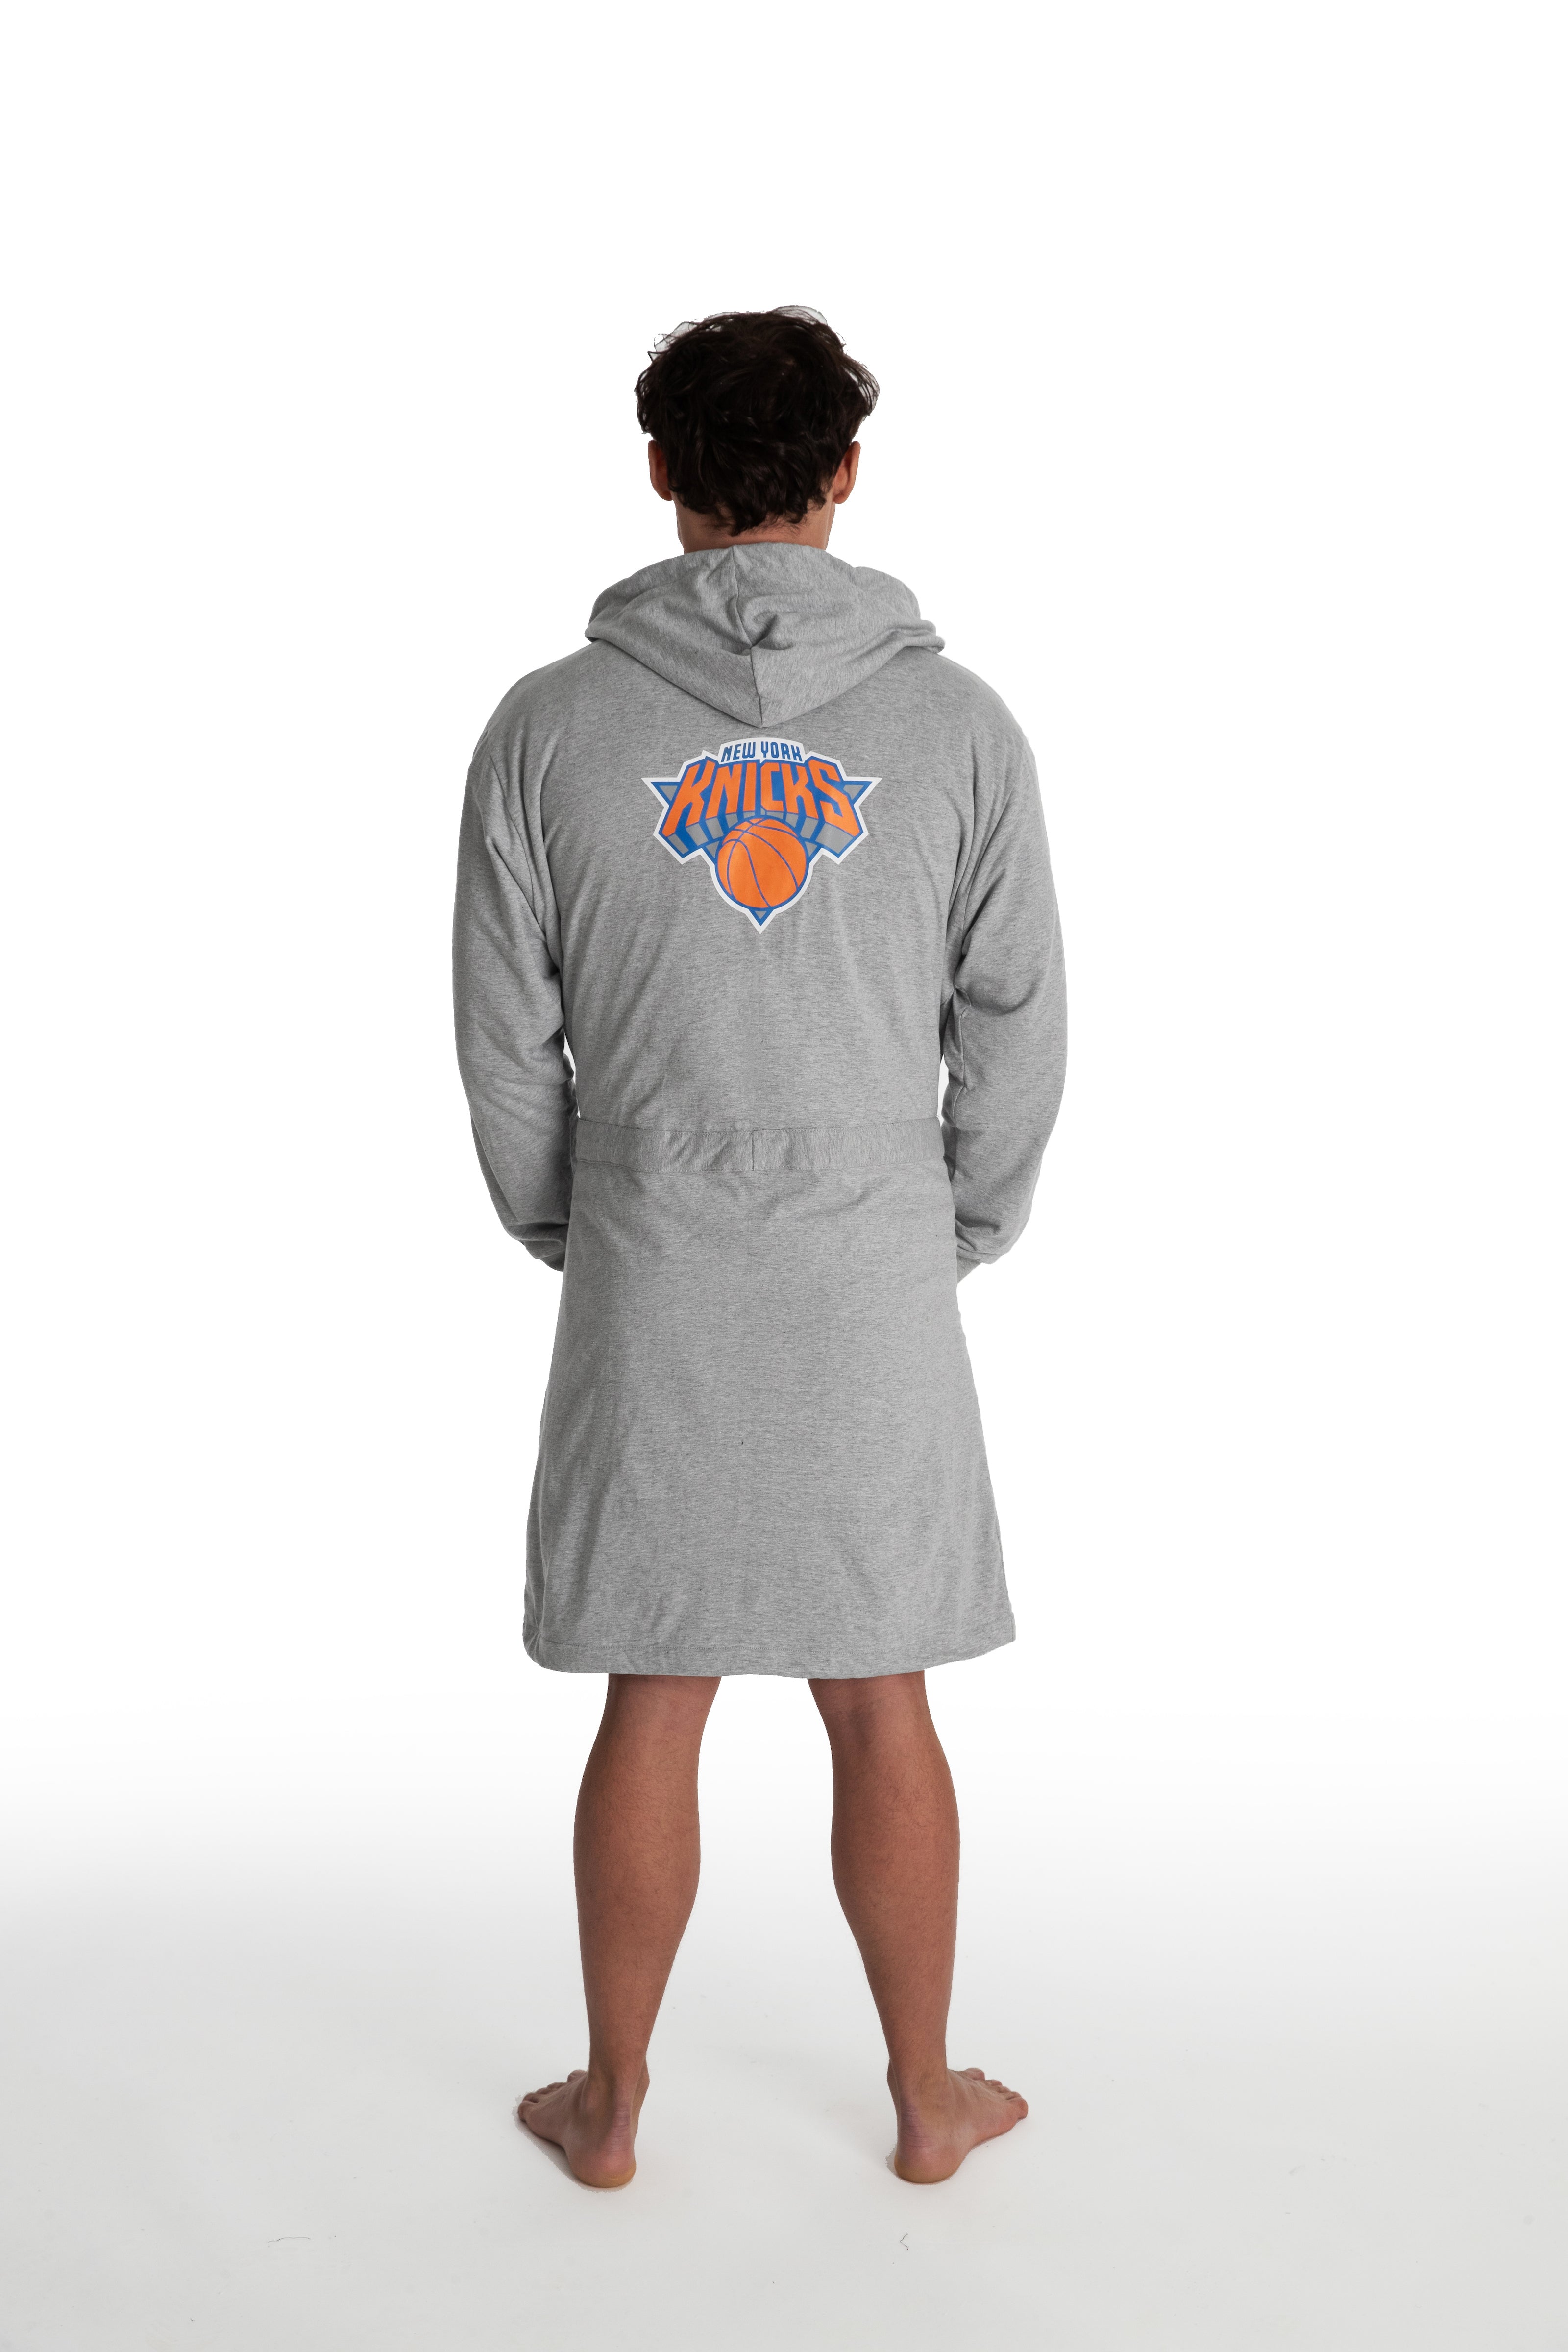 NBA — New York Knicks